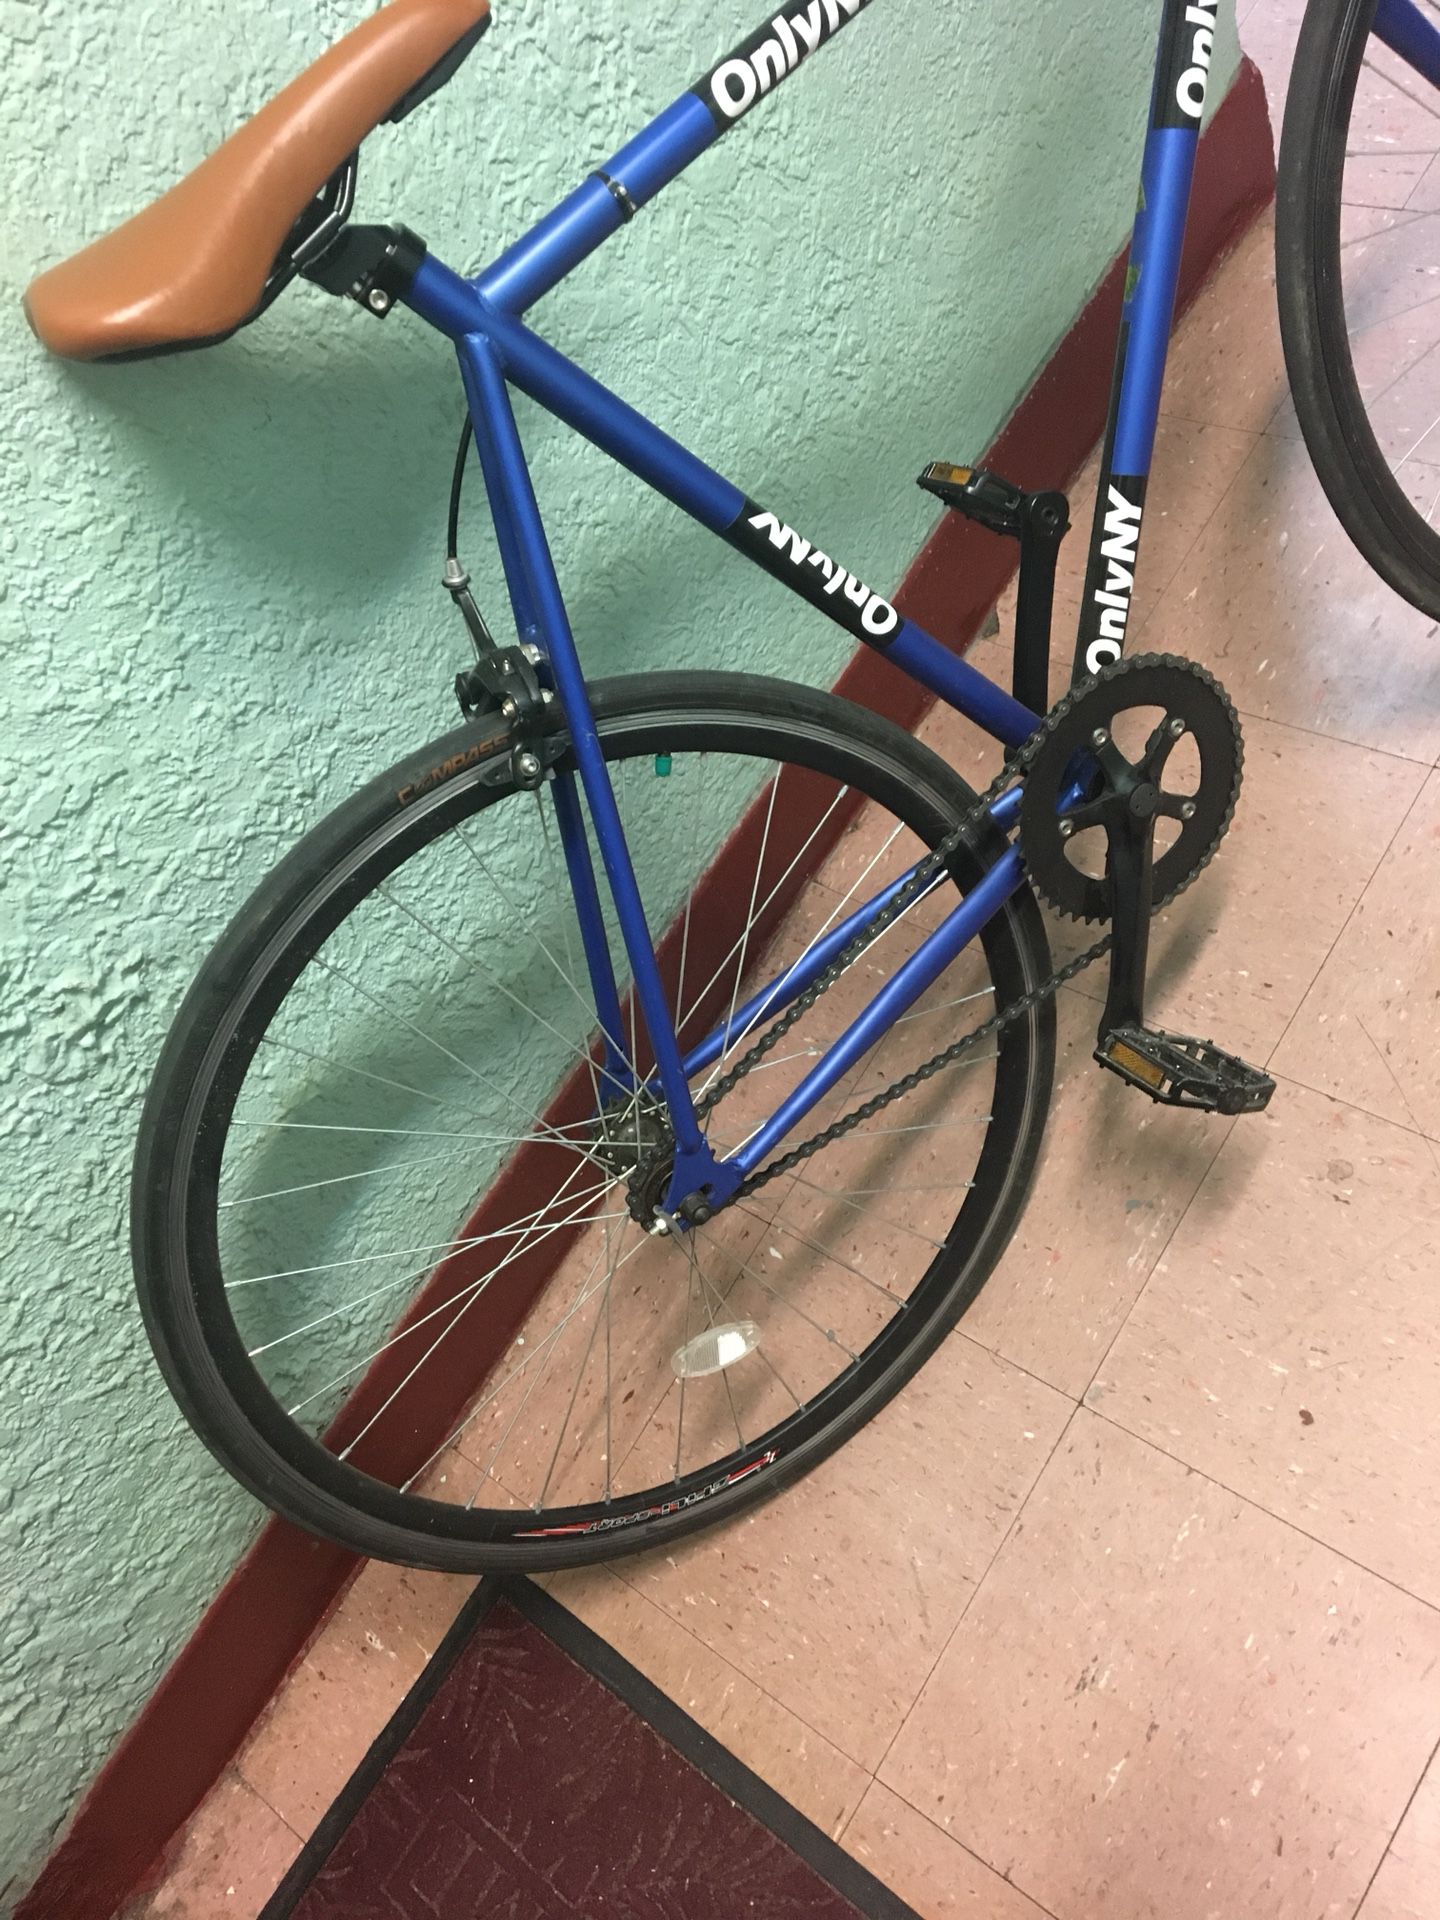 Blue fix gear bike